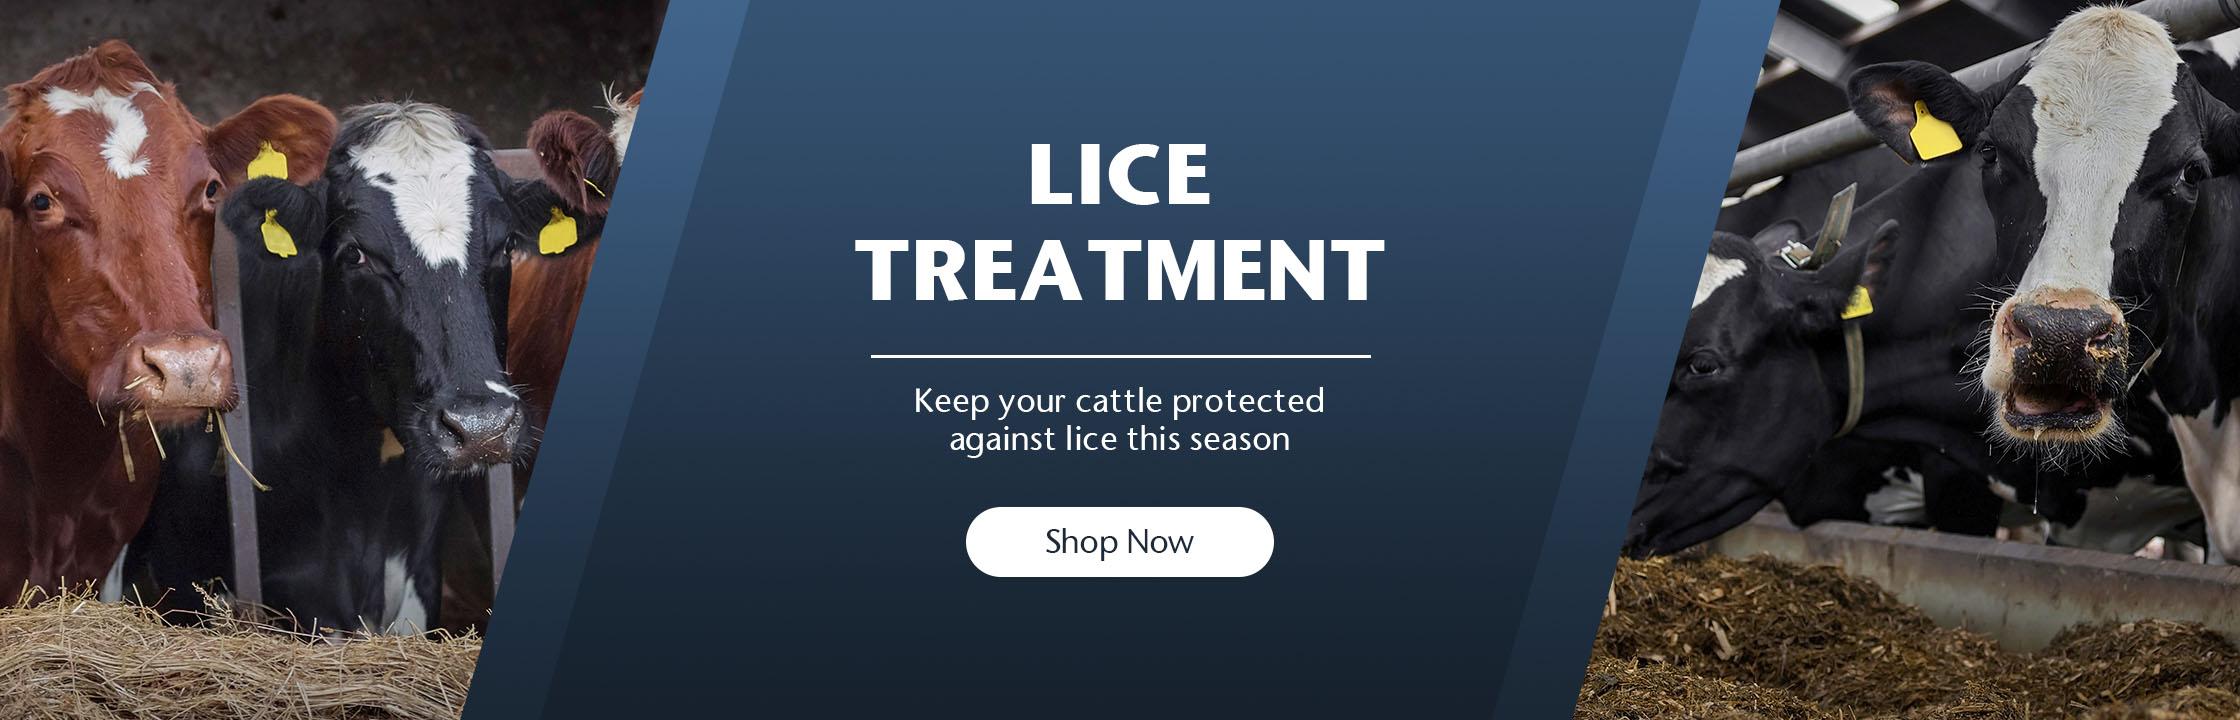 Lice Treatment